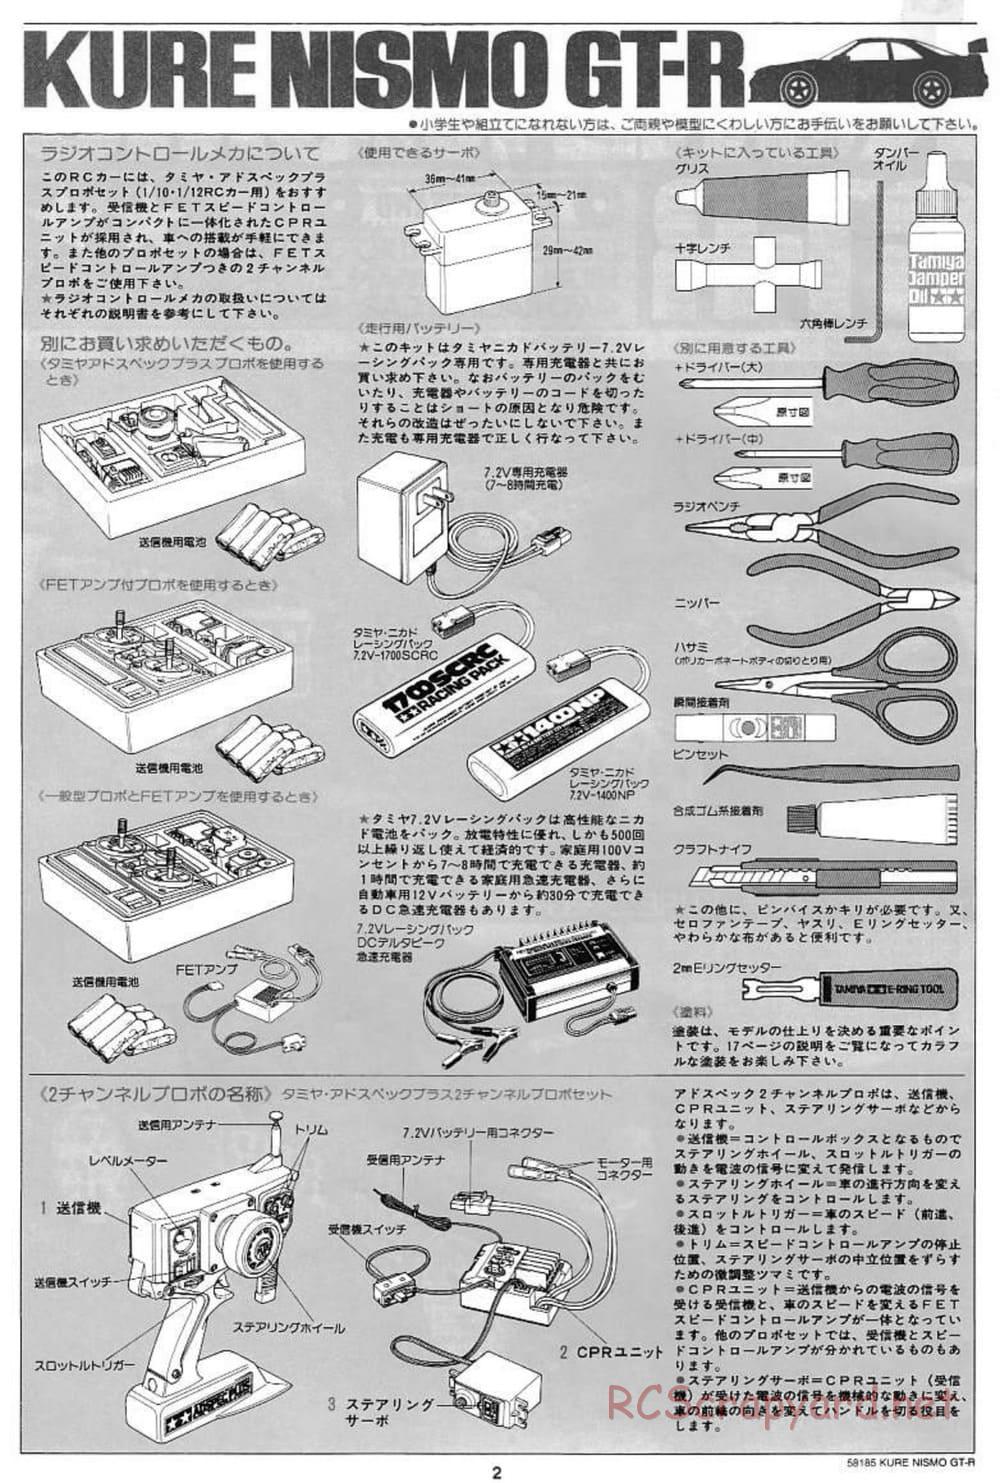 Tamiya - Kure Nismo GT-R - TA-03F Chassis - Manual - Page 2